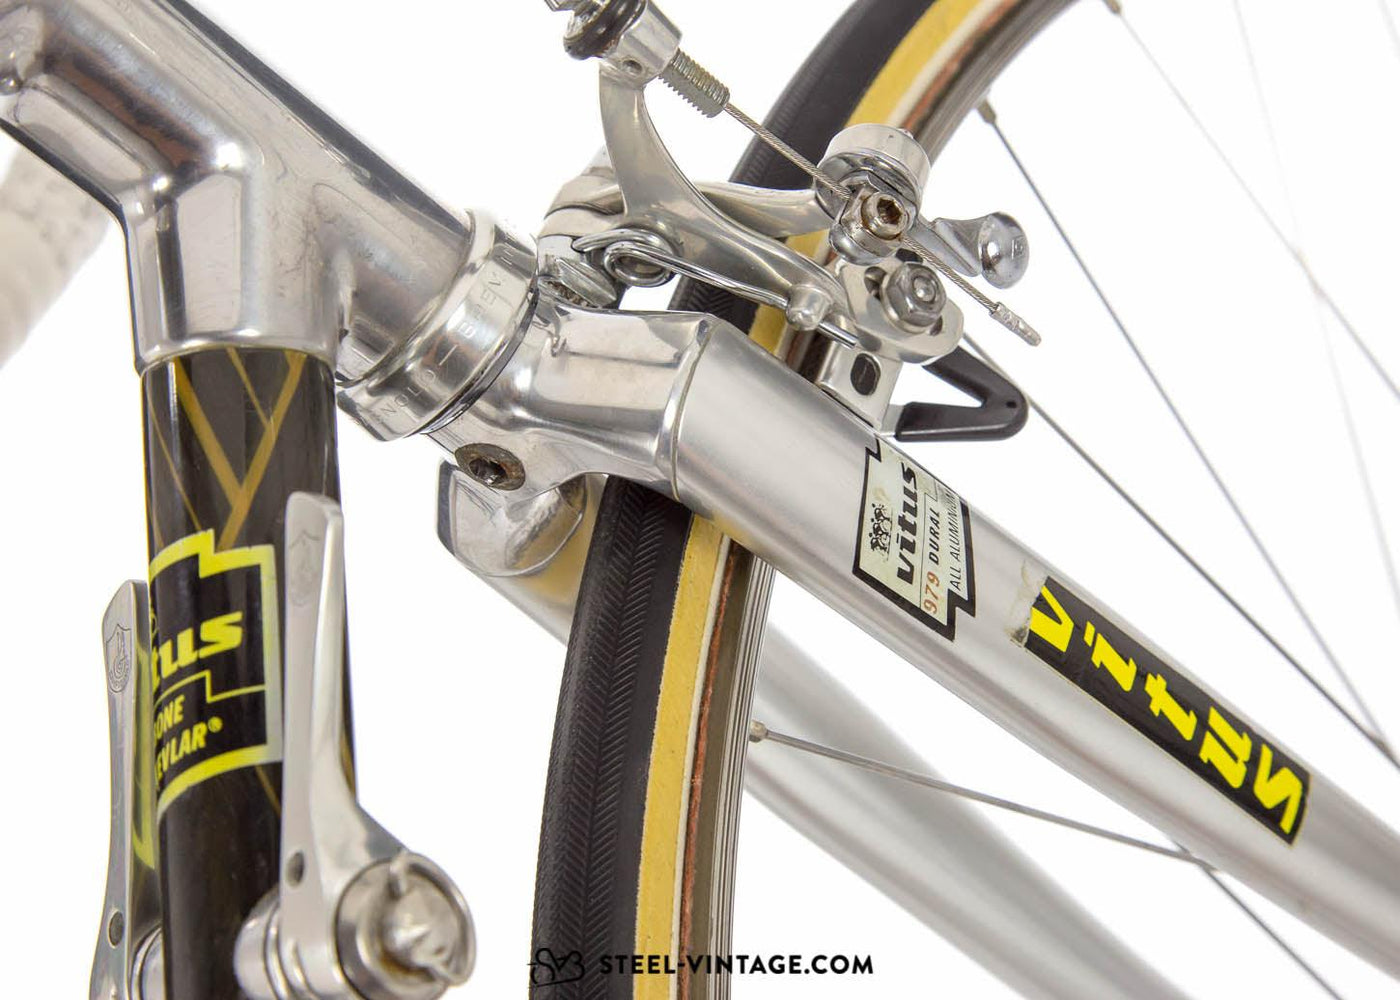 Steel Vintage Bikes - Vitus Carbone 9 Record Classic Road Bike 1980s